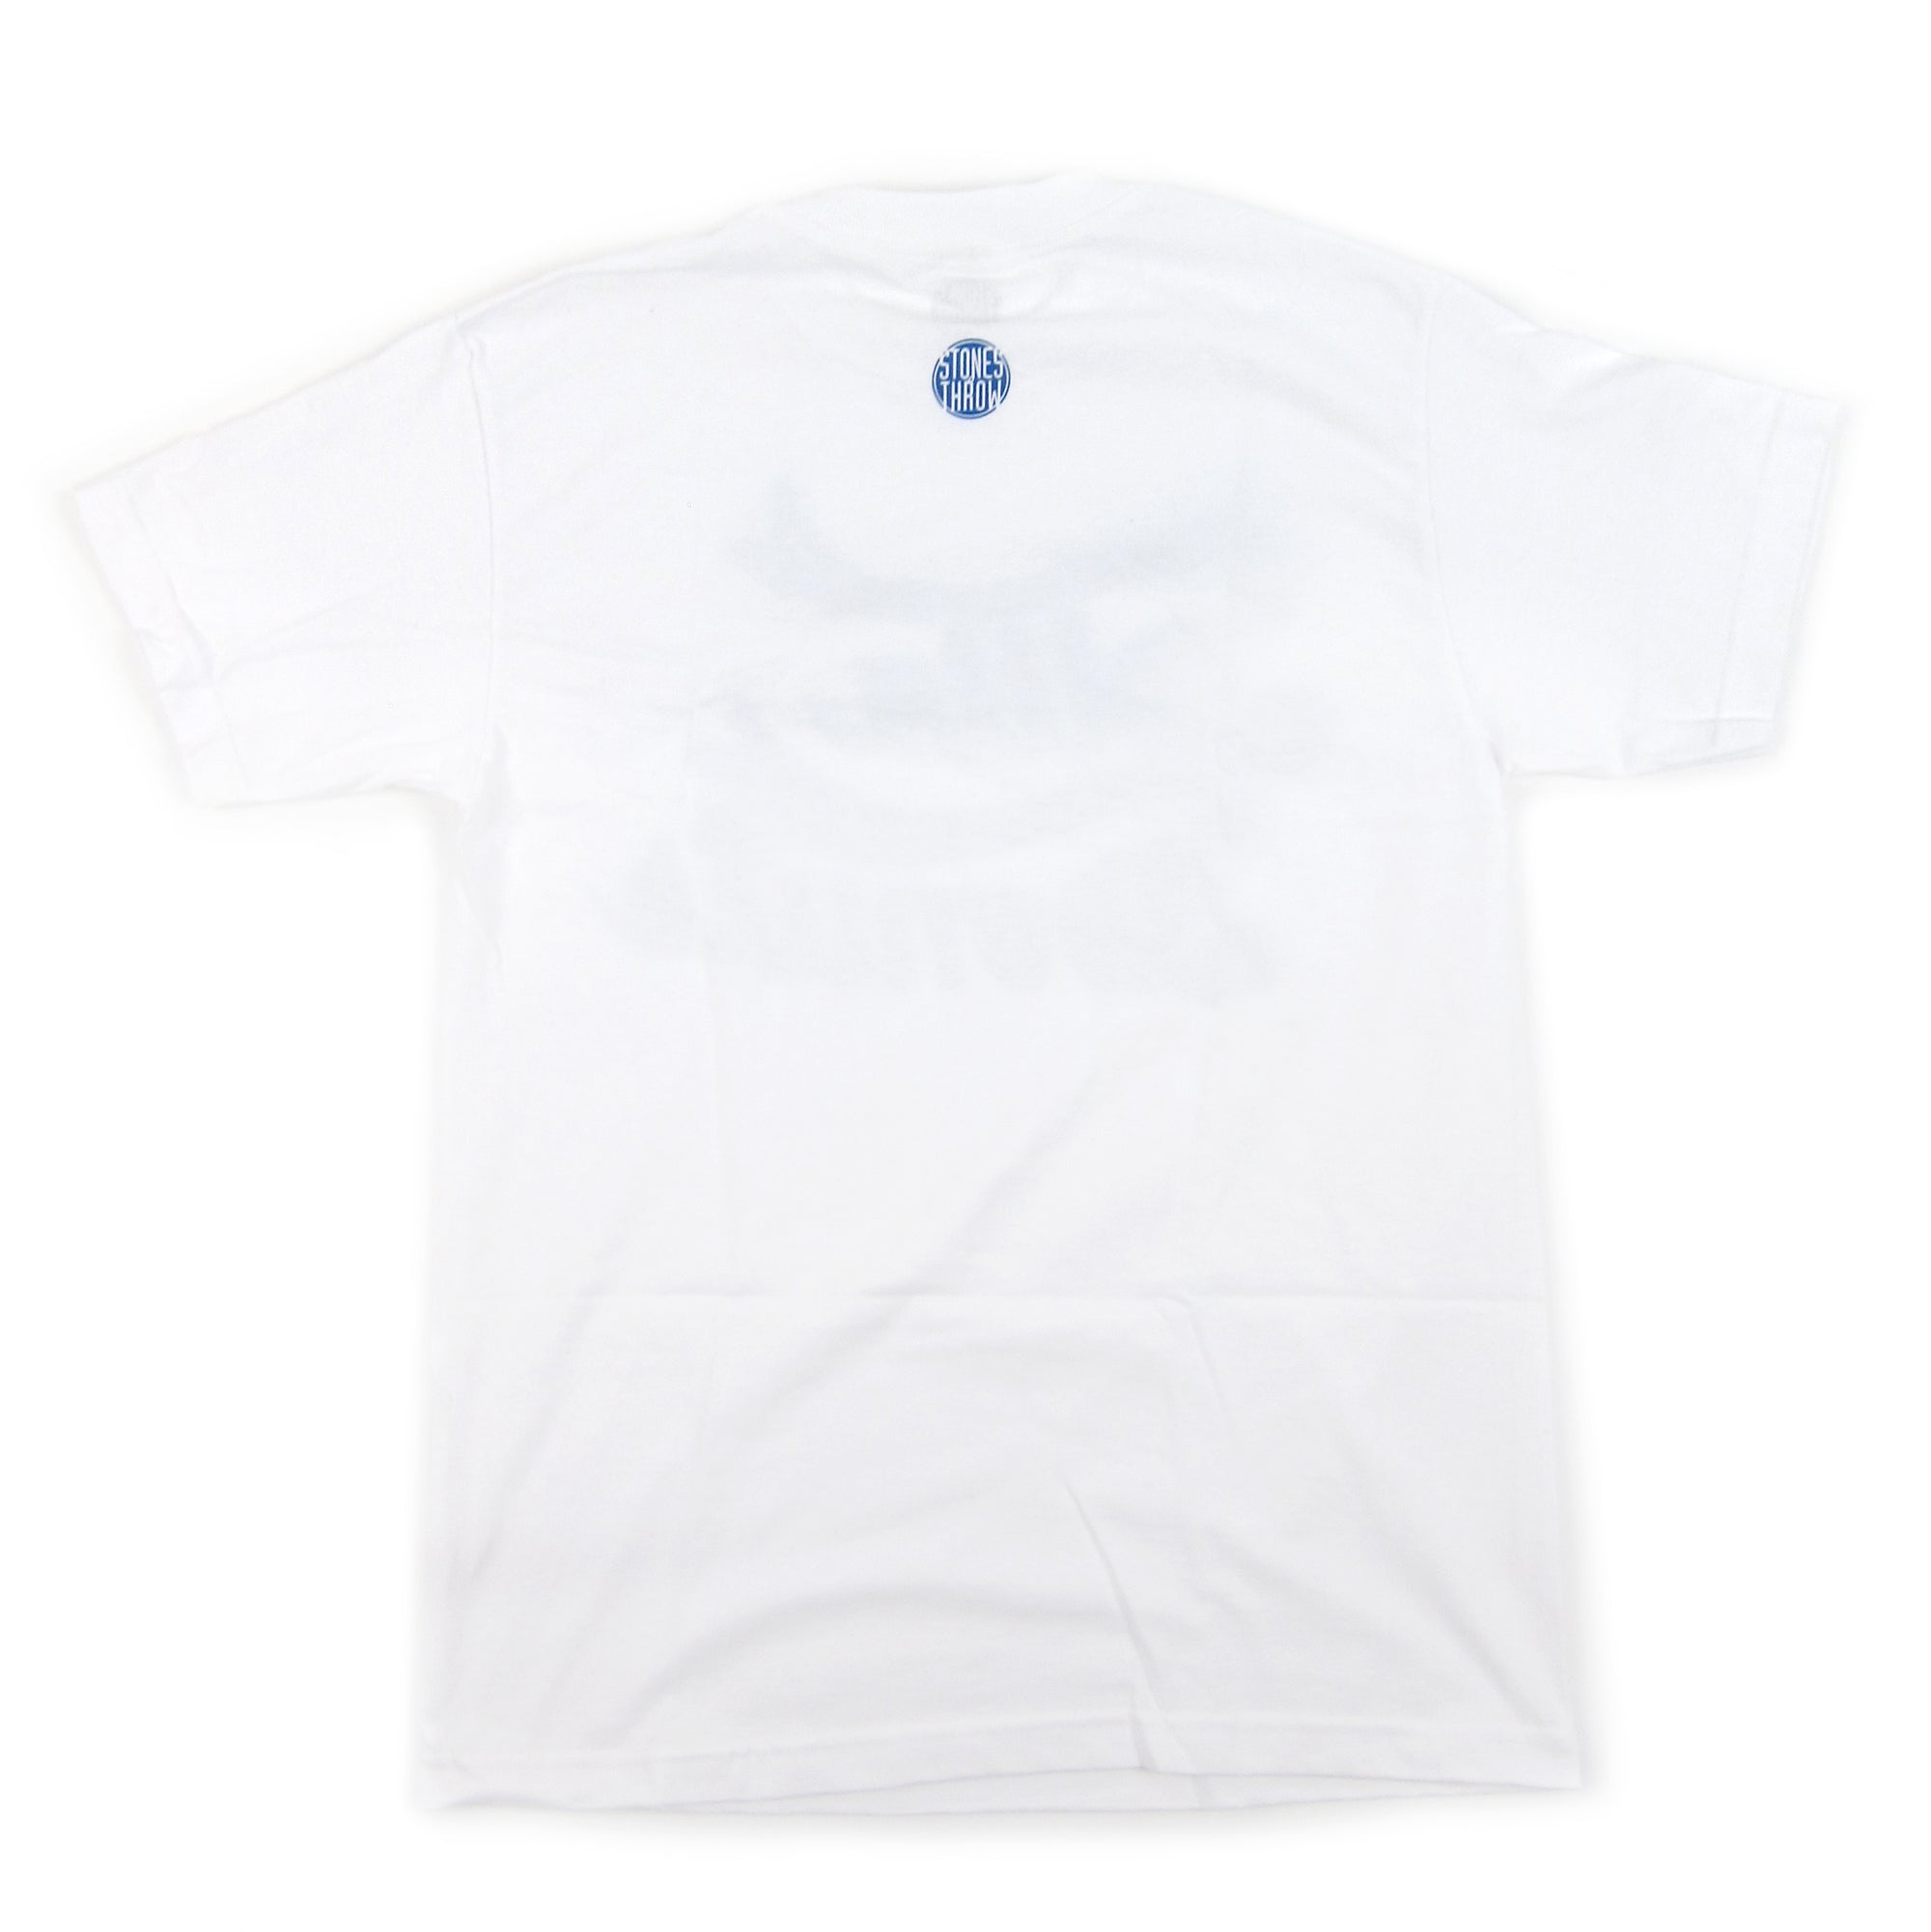 Stones Throw: Dilla Donuts Stencil Shirt - White / Blue — TurntableLab.com